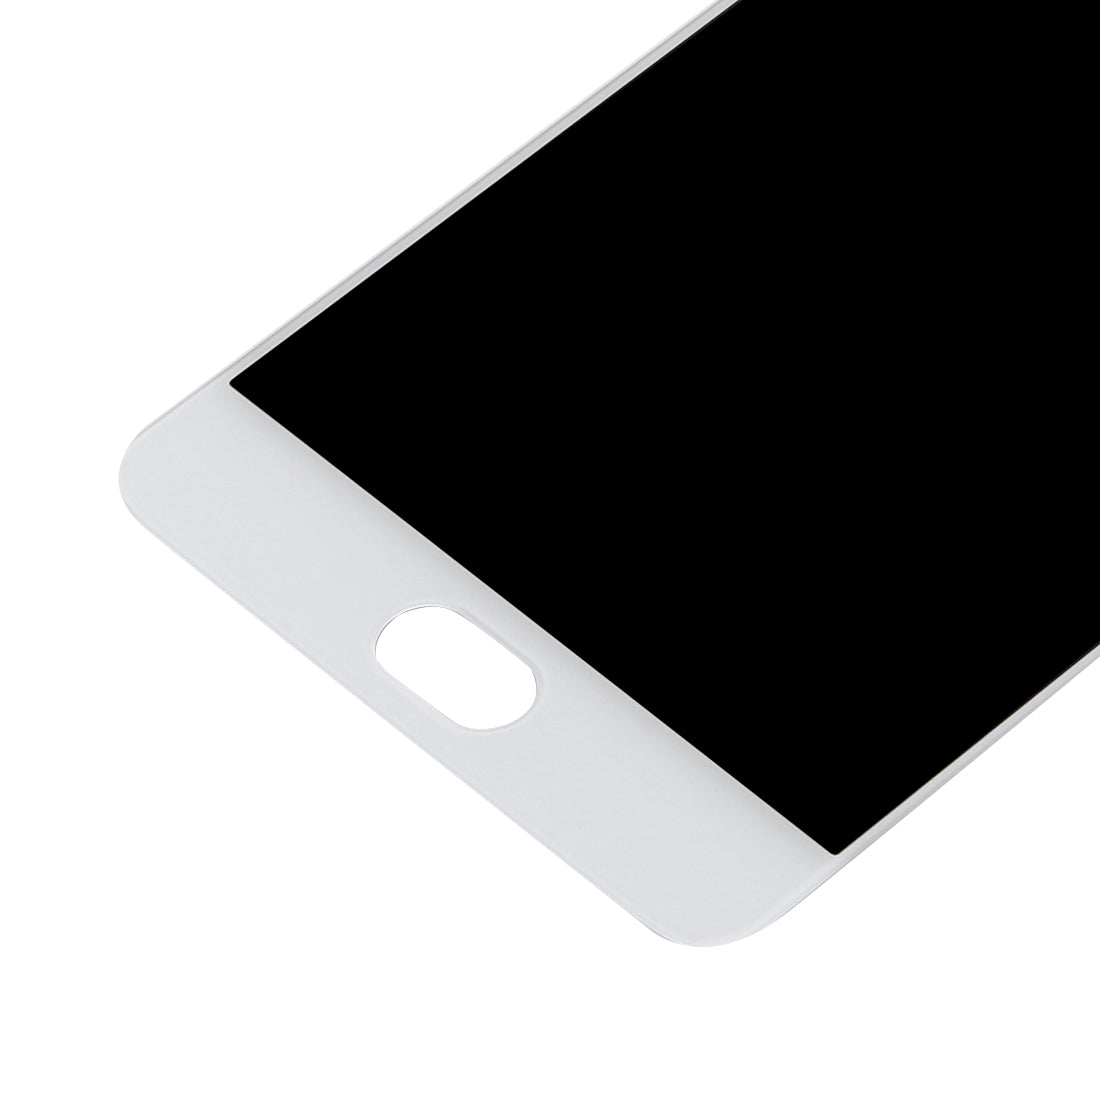 Ecran LCD + Vitre Tactile OnePlus 3 (Version A3000) Blanc